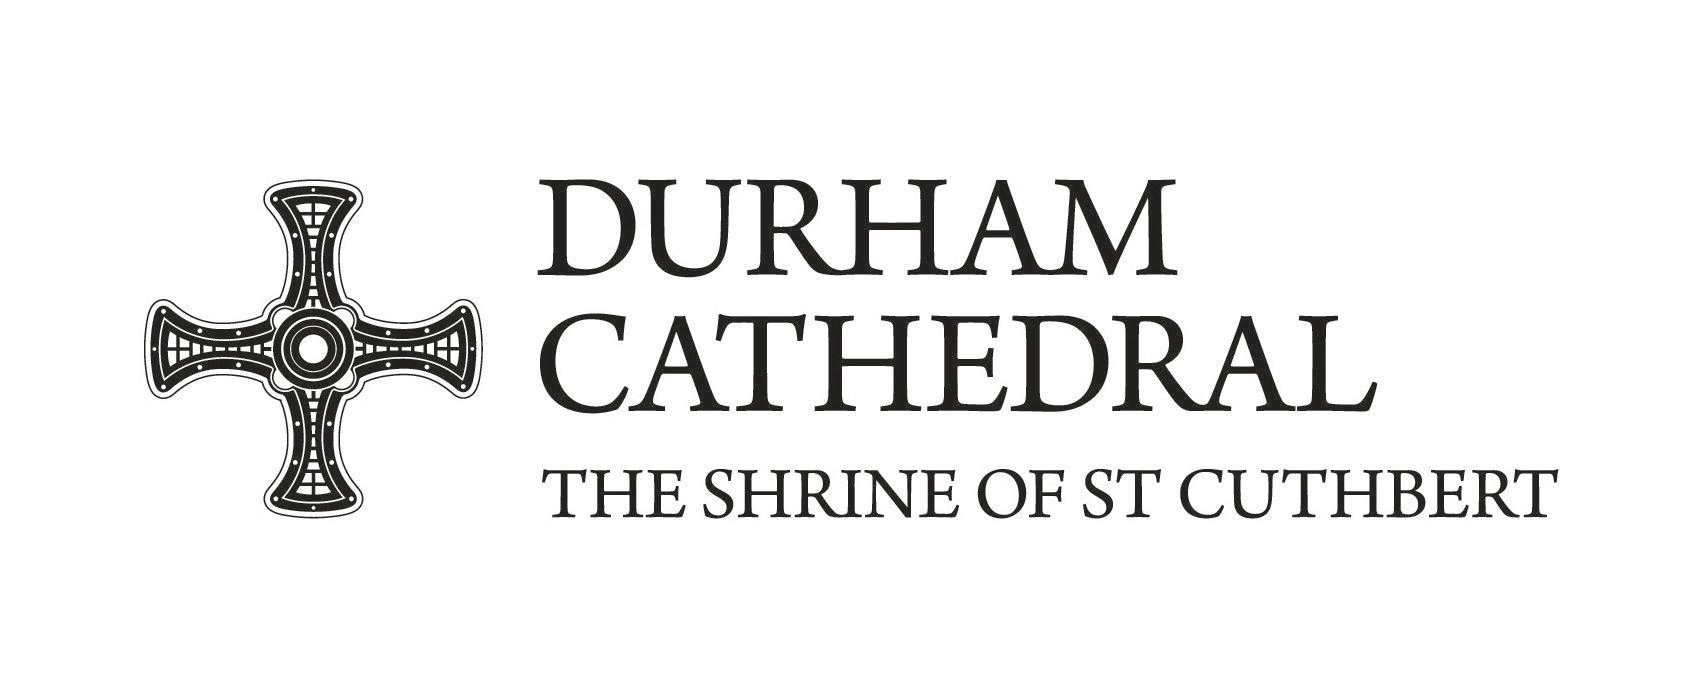 Cathedral Logo - Durham Cathedral | Durham BID